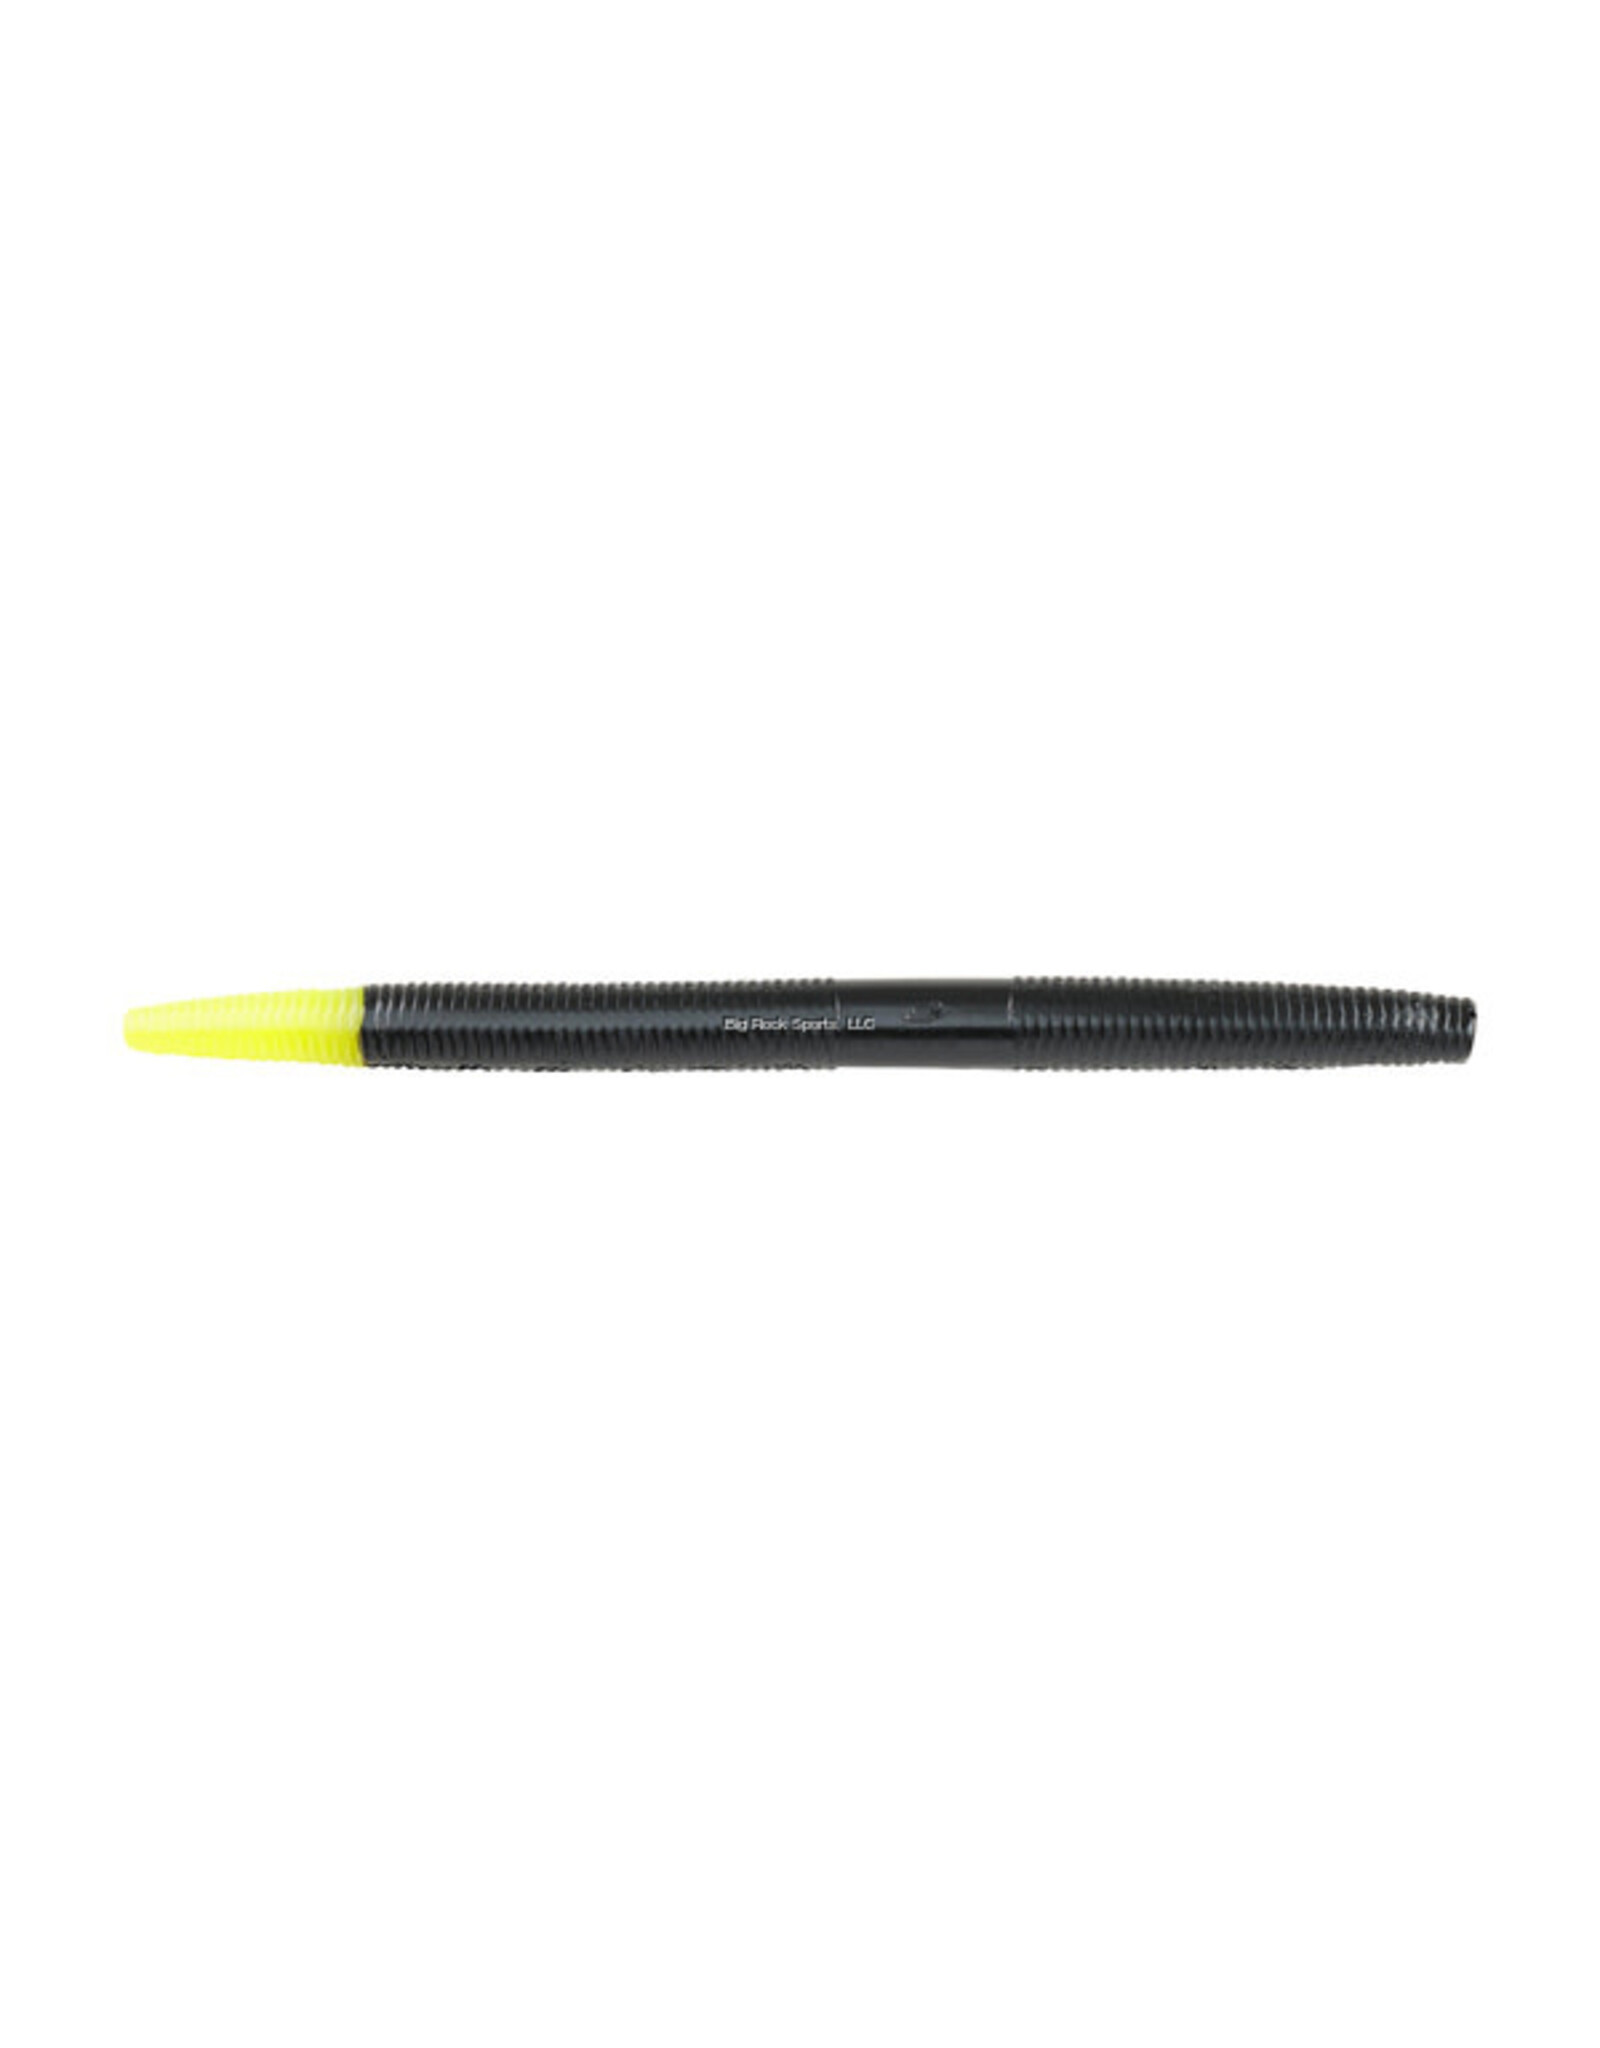 Berkley Berkley PBTG5-BC PowerBait General Soft Stick Bait, Classic Wiggle Action, New Colors. 5 1/4" 8ct. Black/Chartreuse